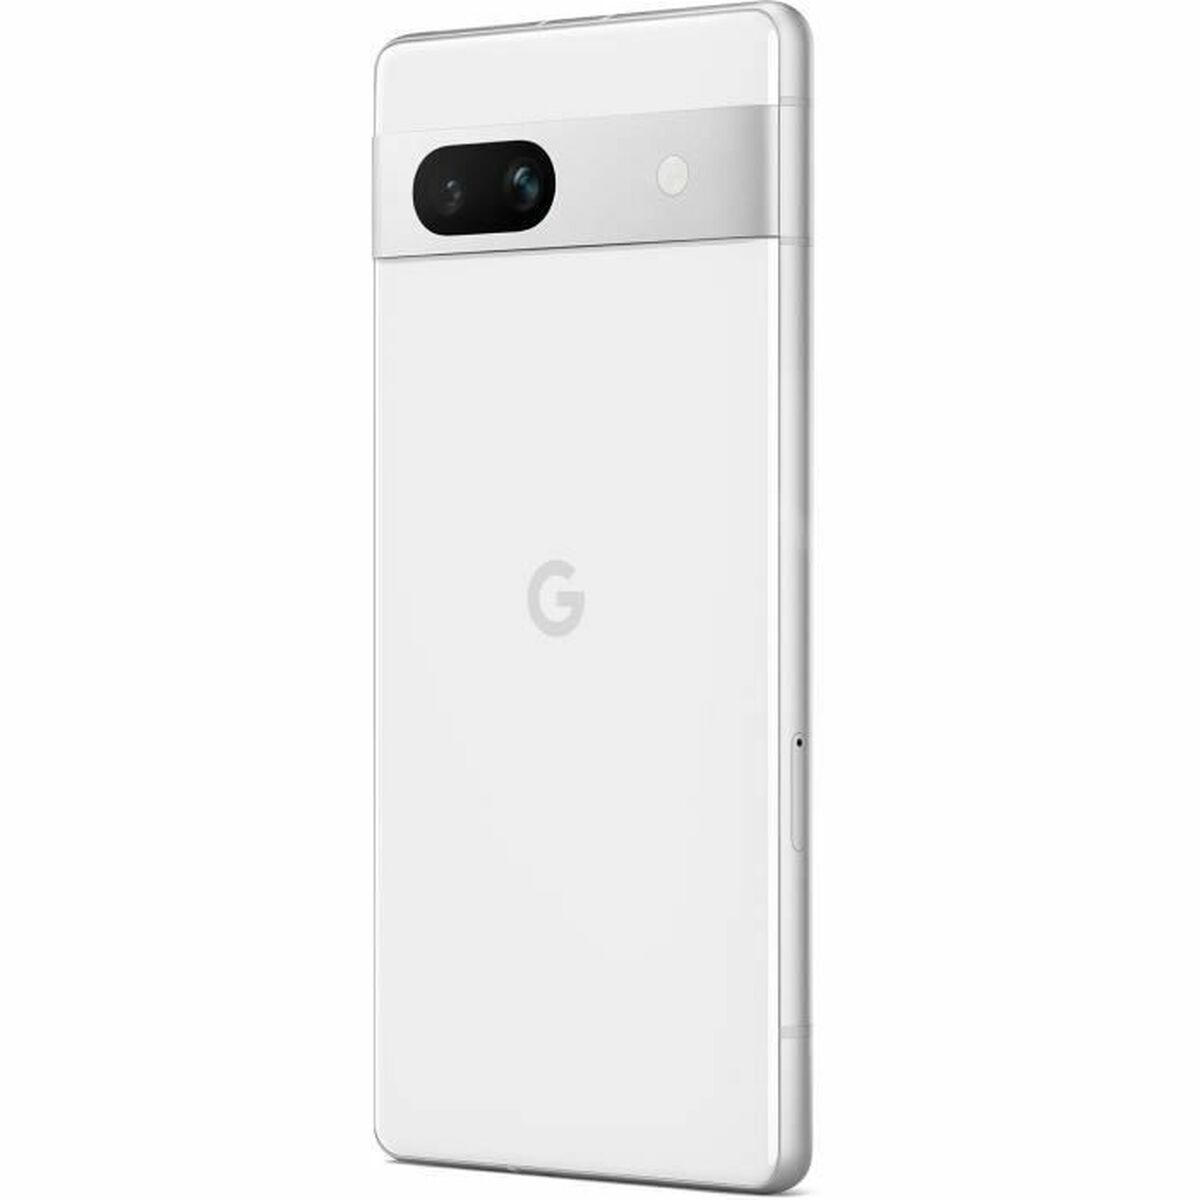 Smartphone Google Pixel 7a White 128 GB 8 GB RAM